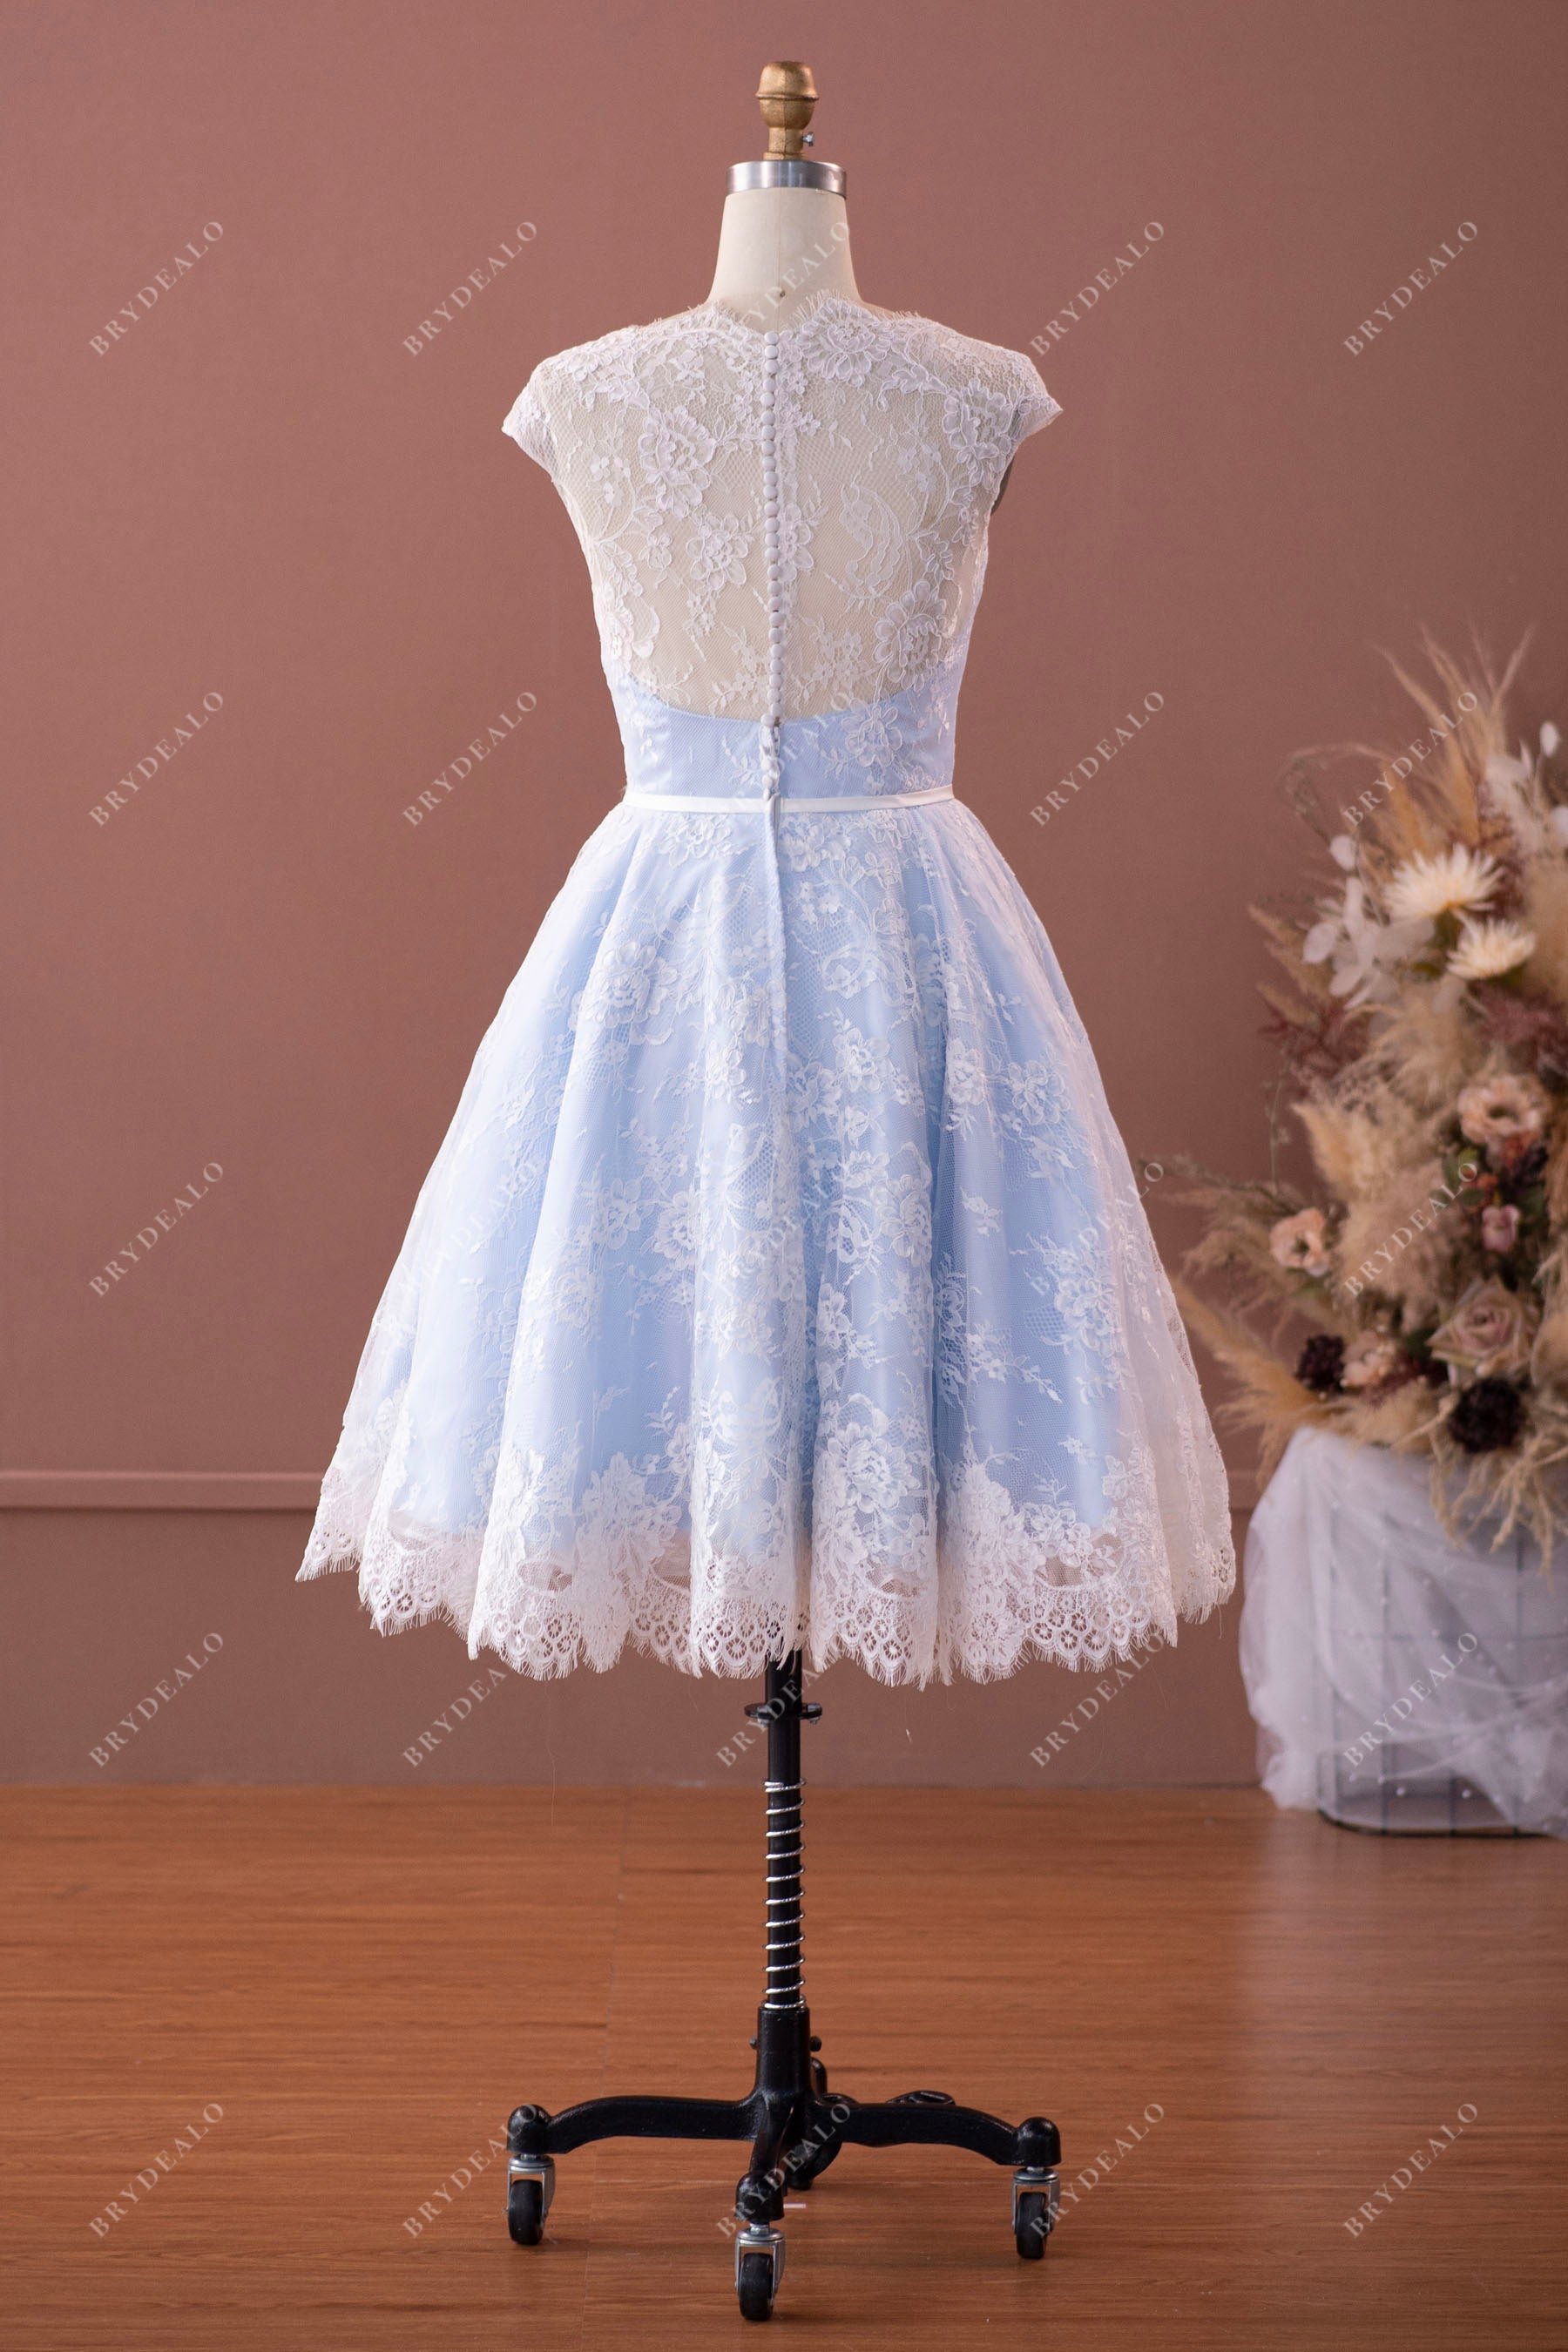 Vintage Lace Sky Blue Cap Sleeve Illusion Back Tea Length Wedding Dress Sample